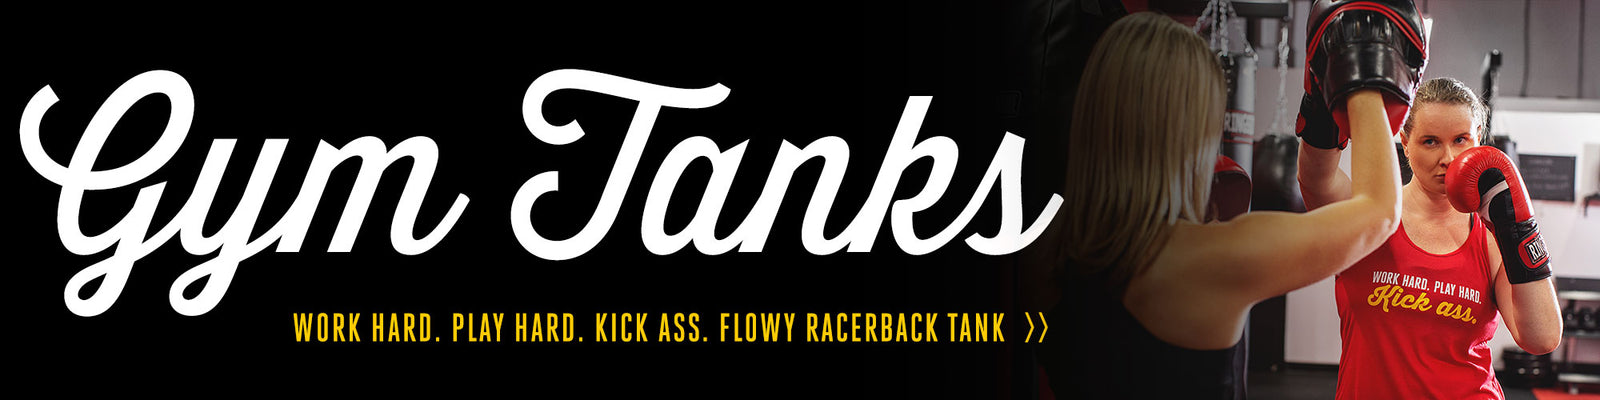 Do Squats Funny Workout Tank, Women's Racerback Tank, Yoga Tank, Gym Shirt